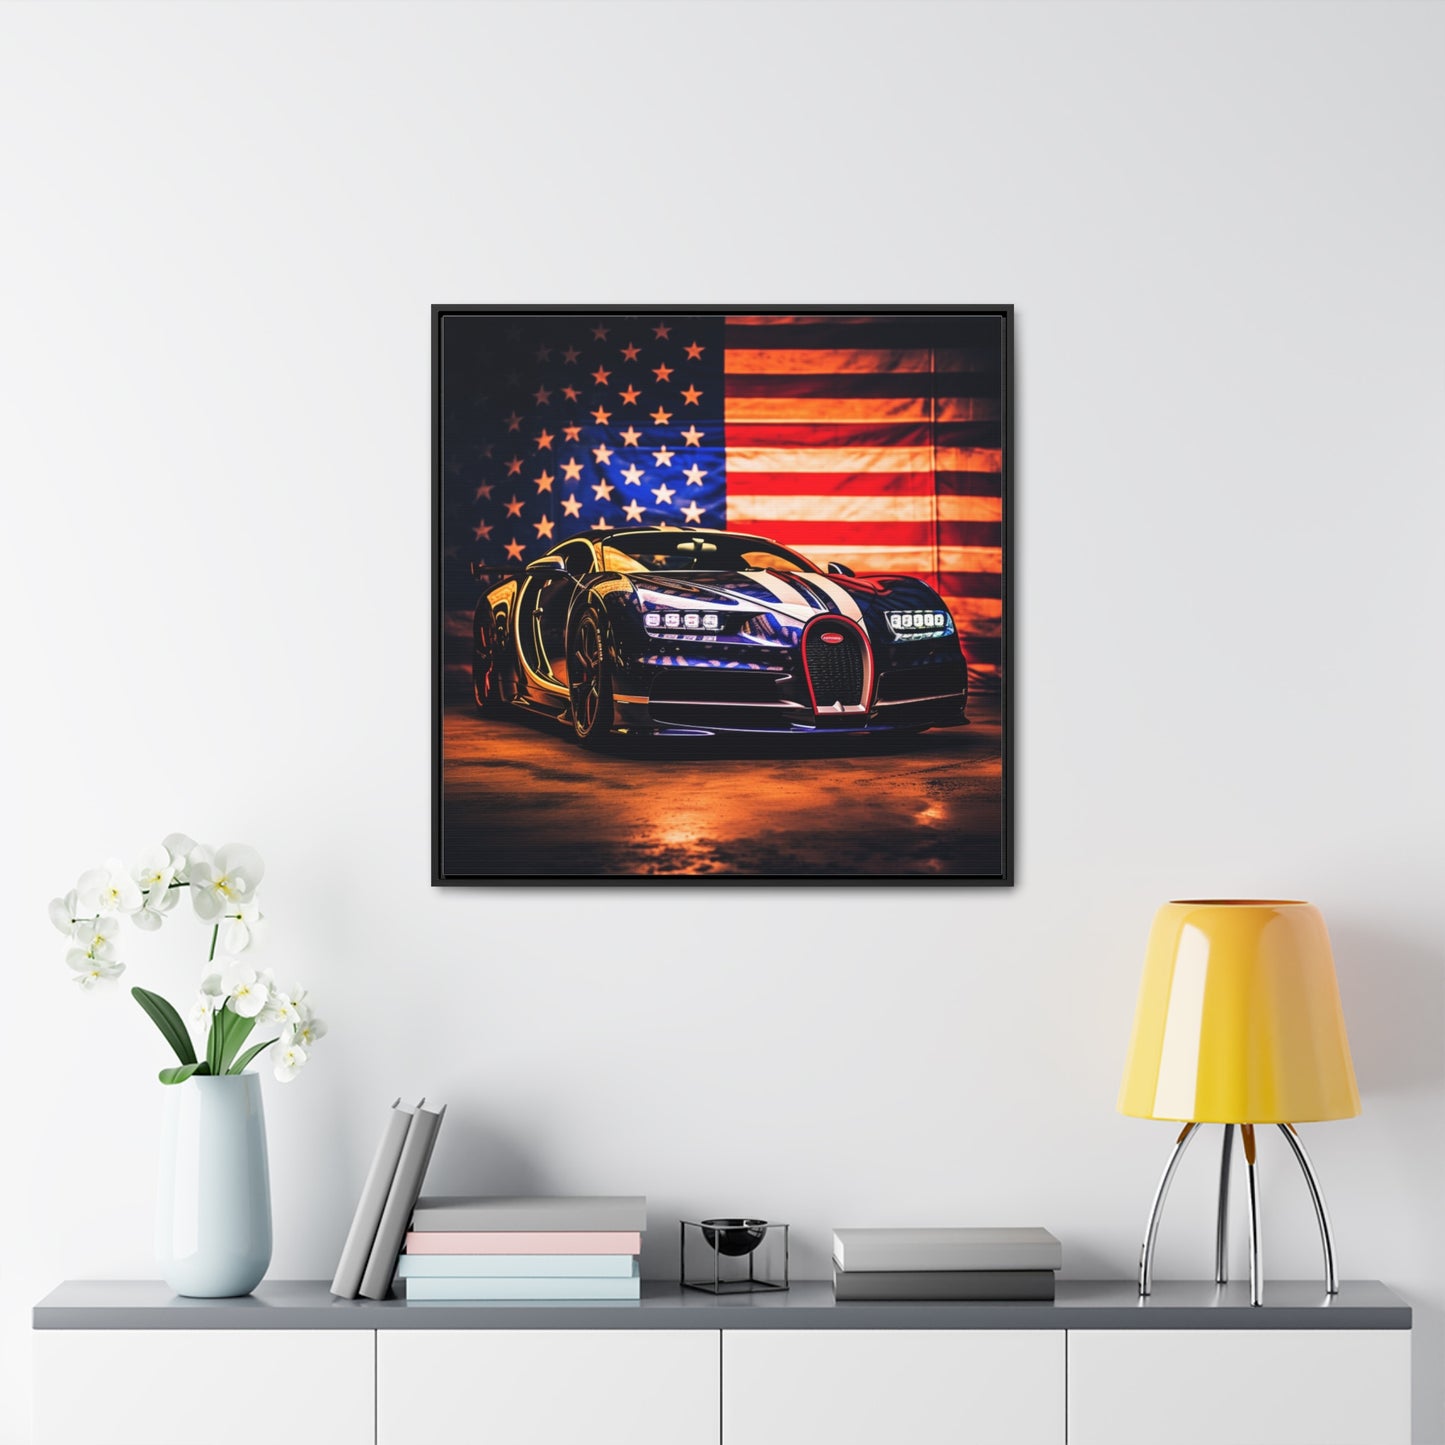 Gallery Canvas Wraps, Square Frame Macro Bugatti American Flag 4